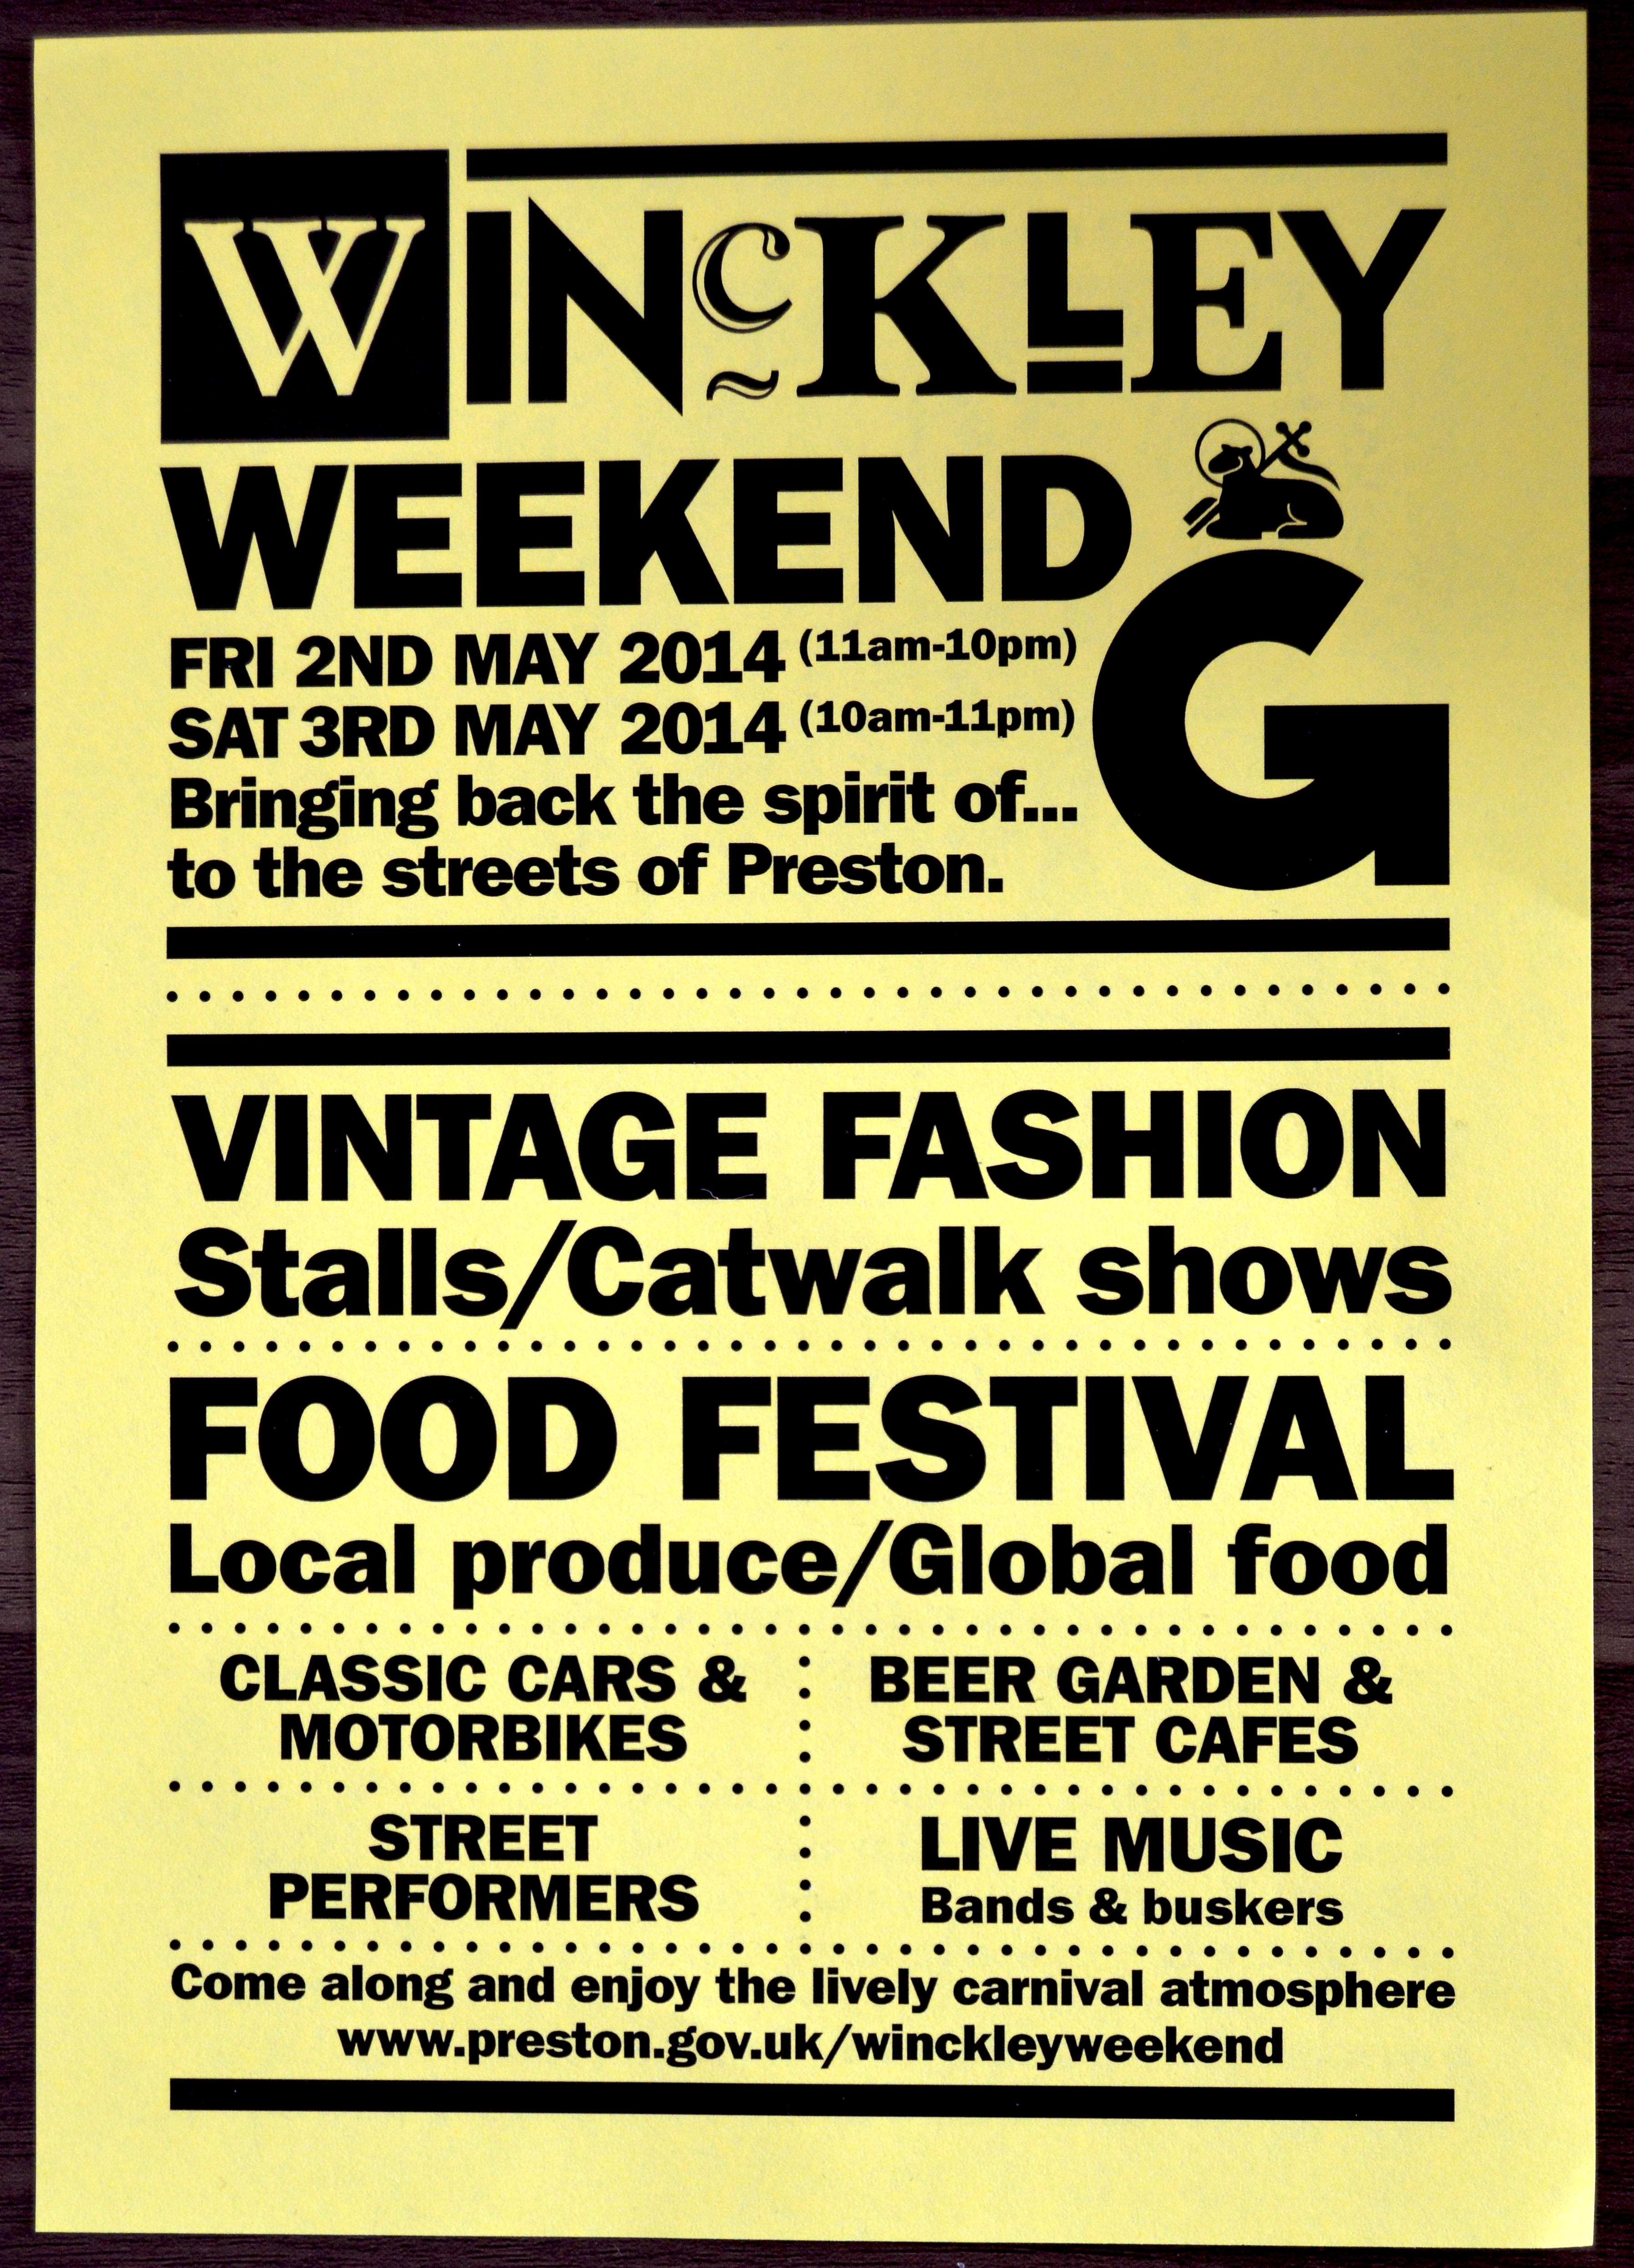 Winckley Weekend Leaflet in Preston